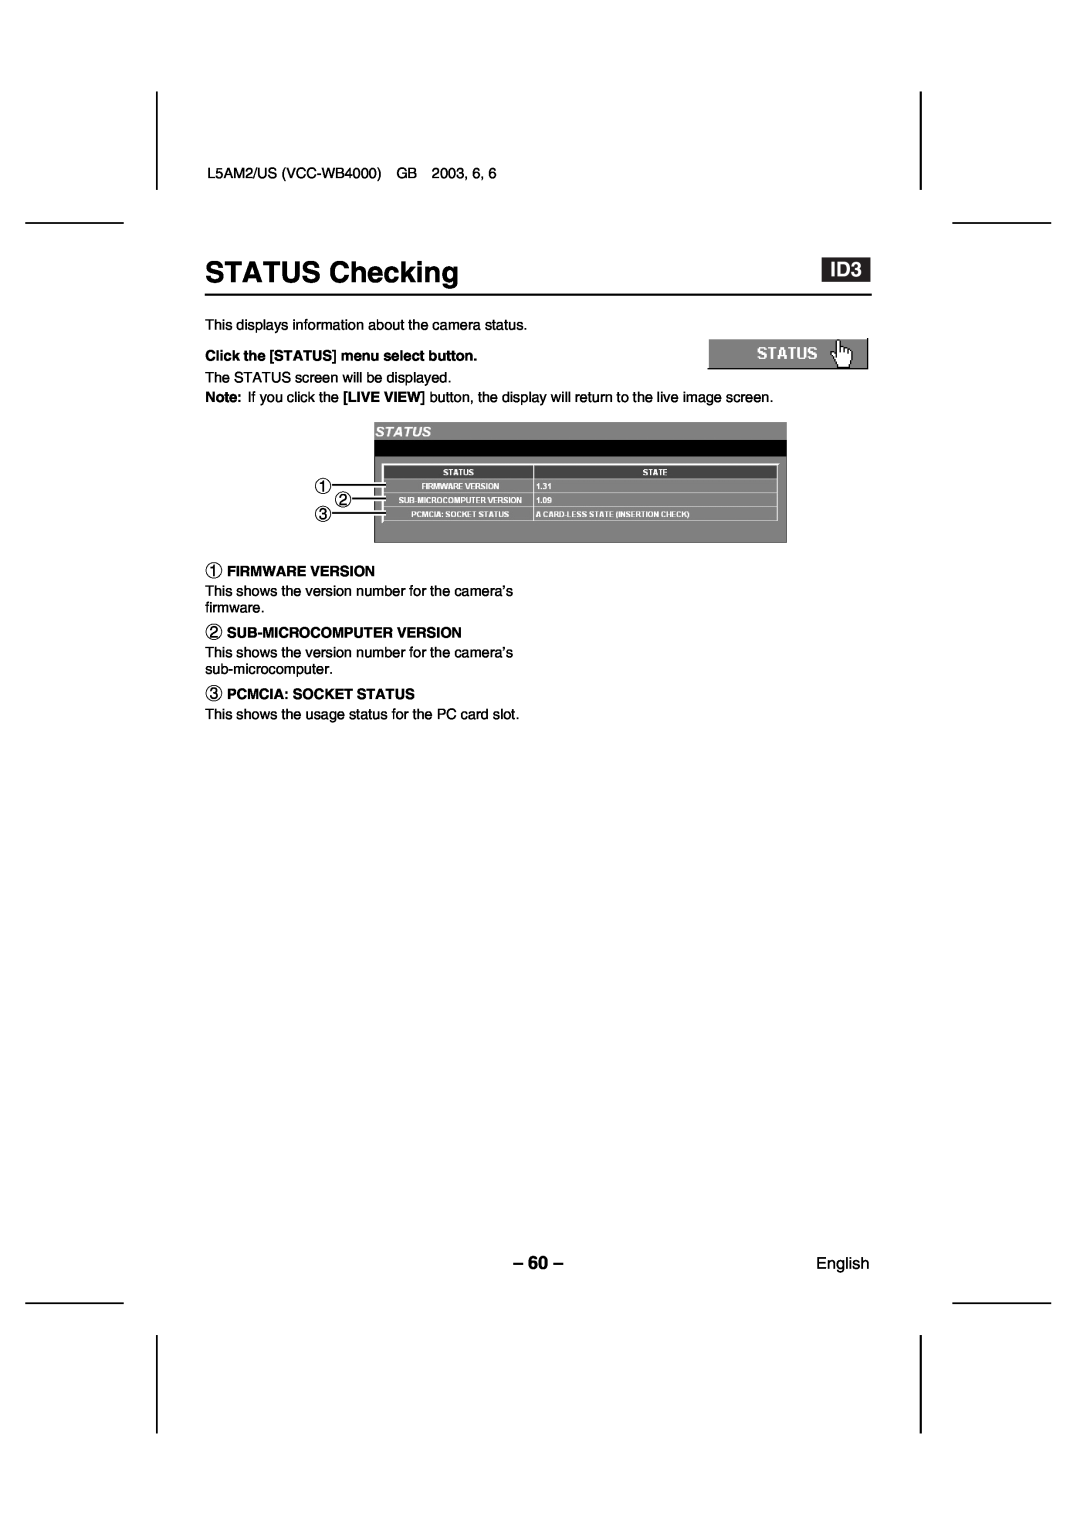 Sanyo VCC-WB4000 STATUS Checking, Click the STATUS menu select button, Firmware Version, Sub-Microcomputer Version 